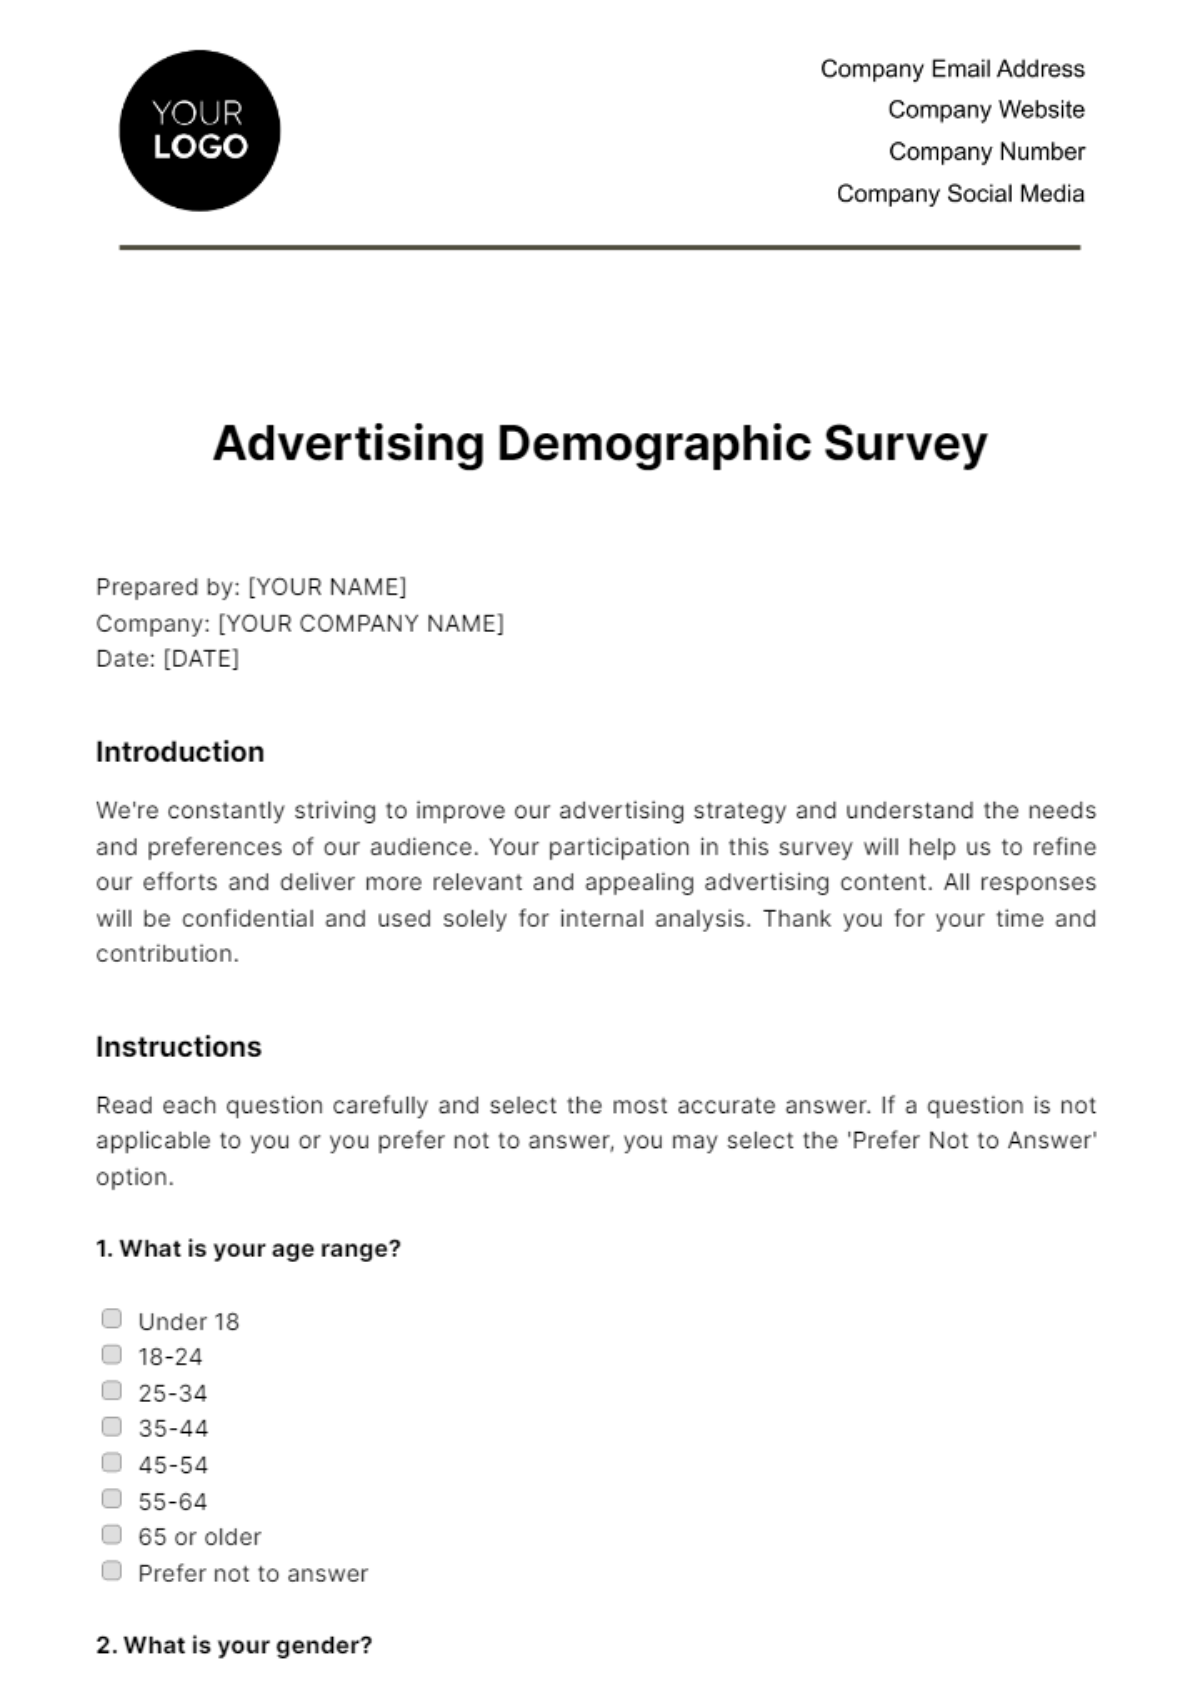 Advertising Demographic Survey Template